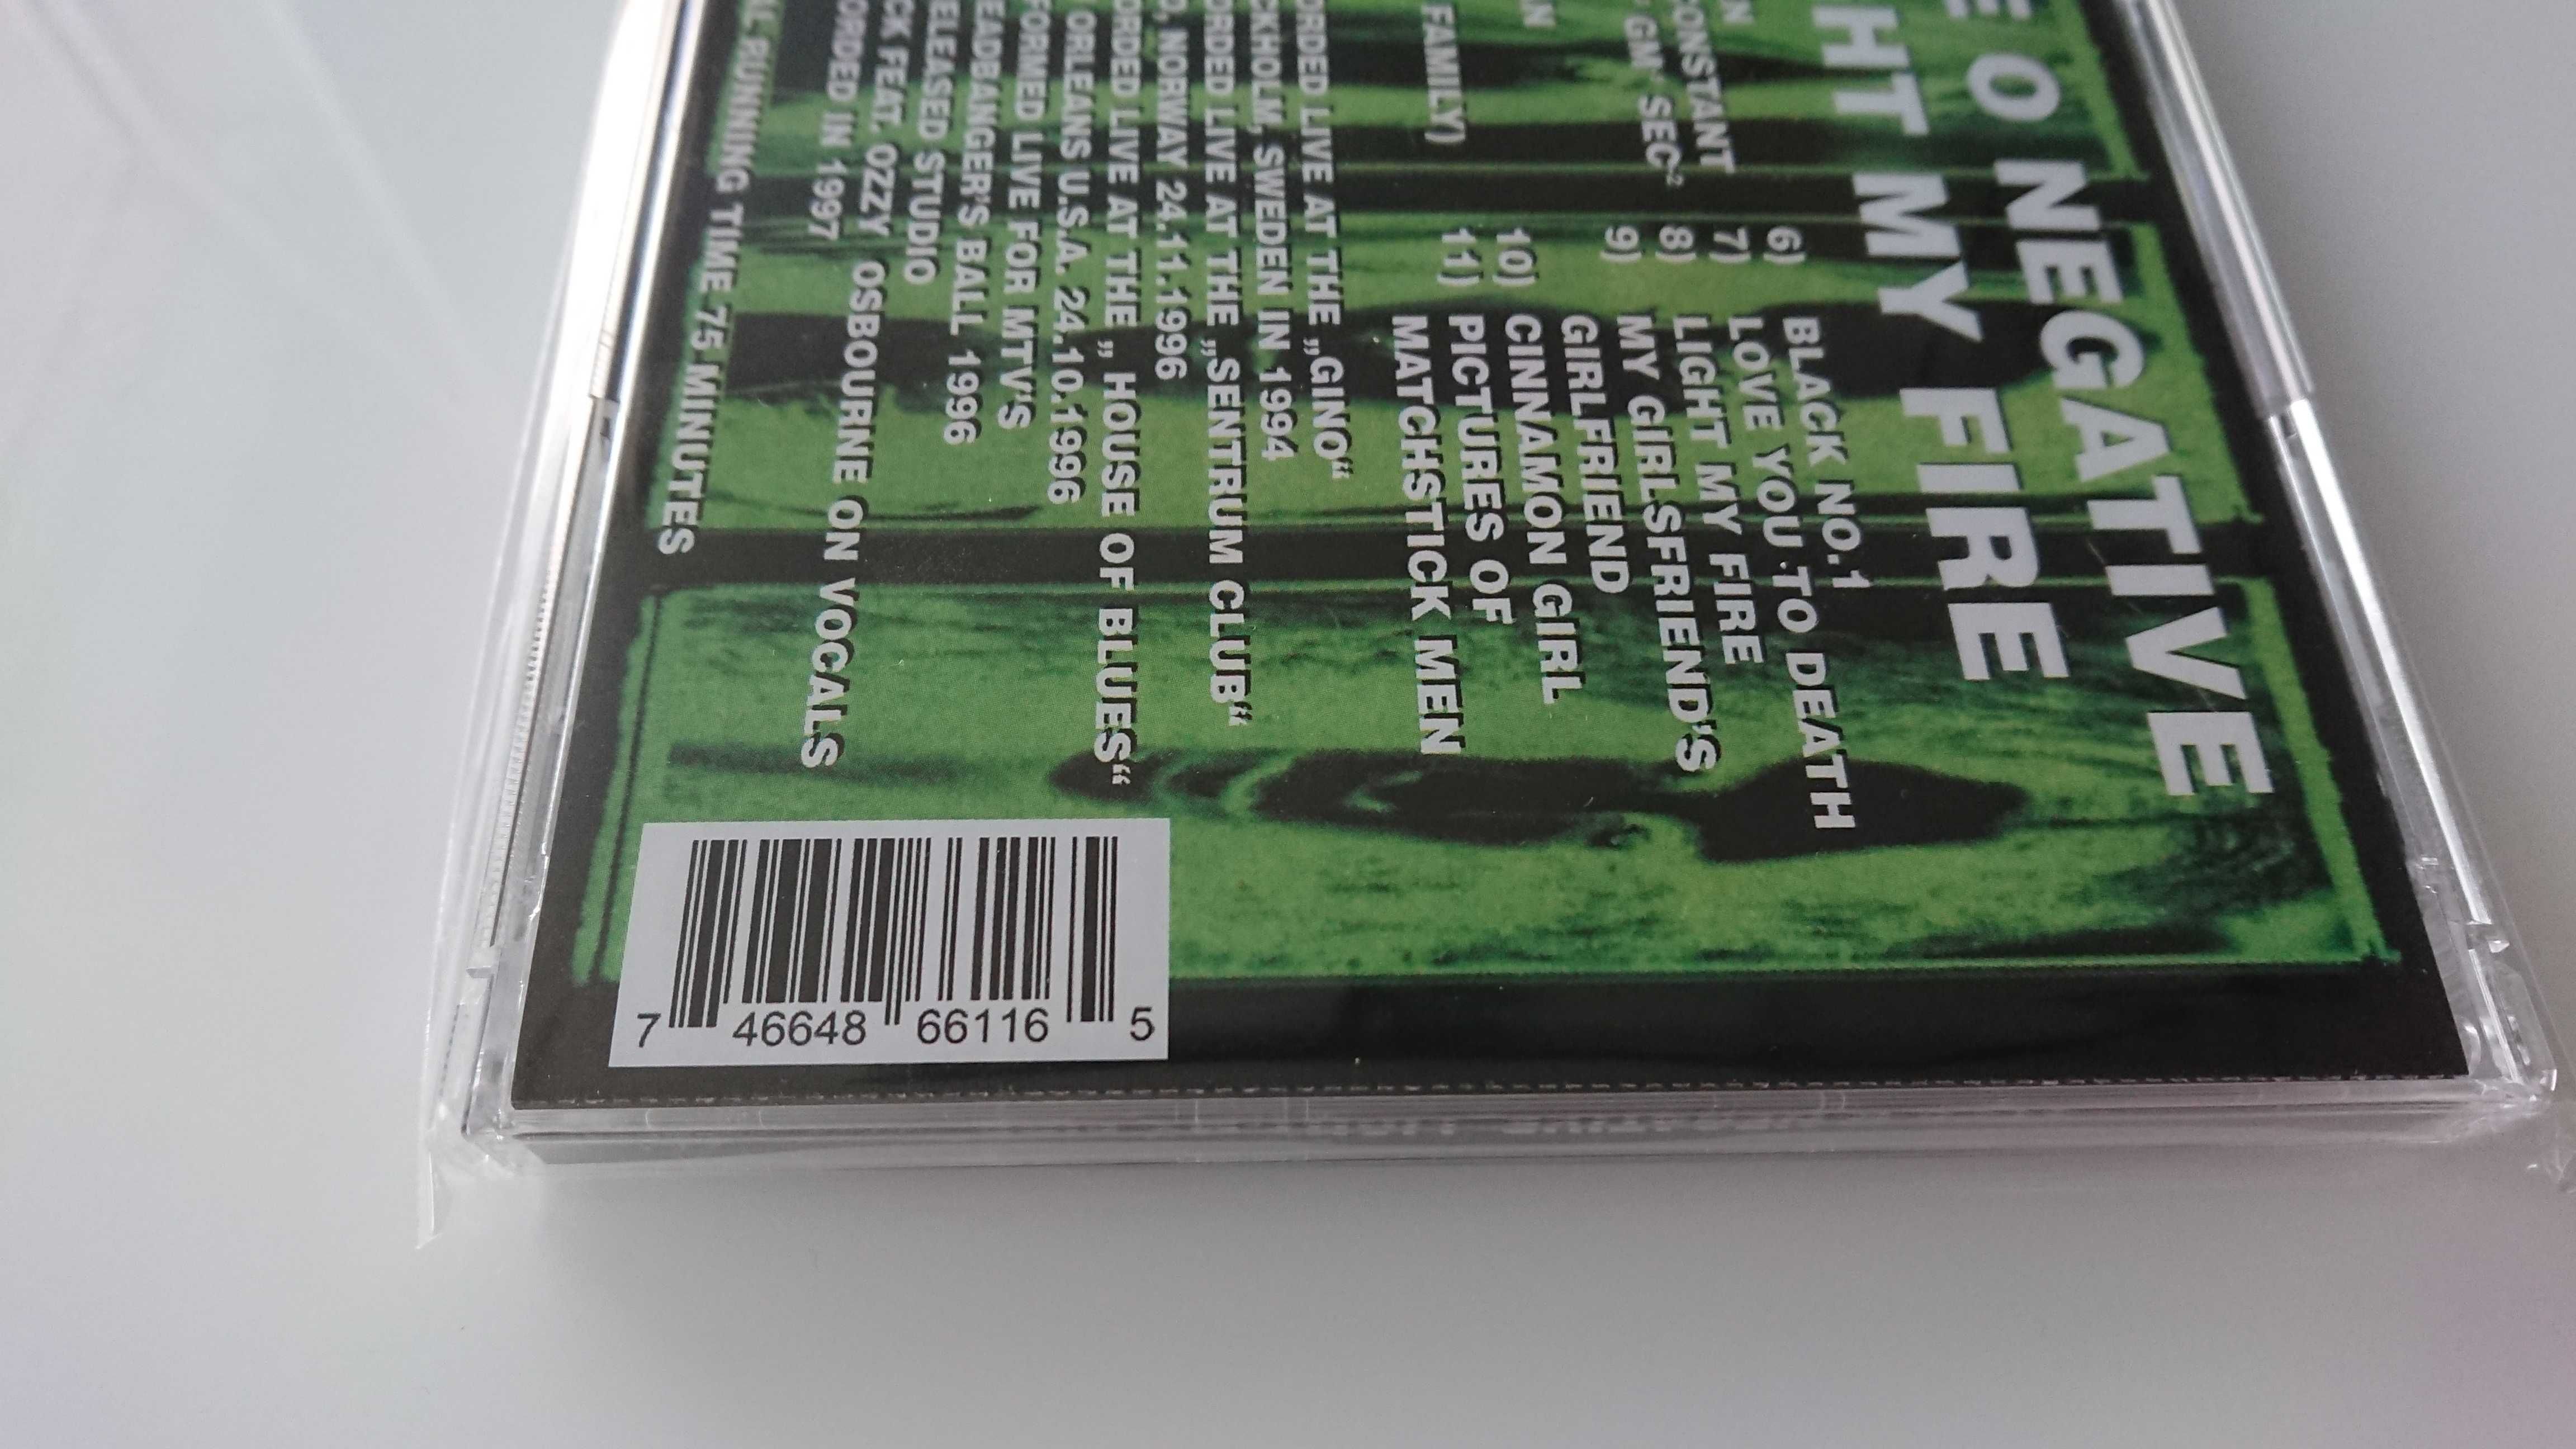 Type O Negative Light My Fire CD *NOWA 2020 Jewelcase Remastered Sound